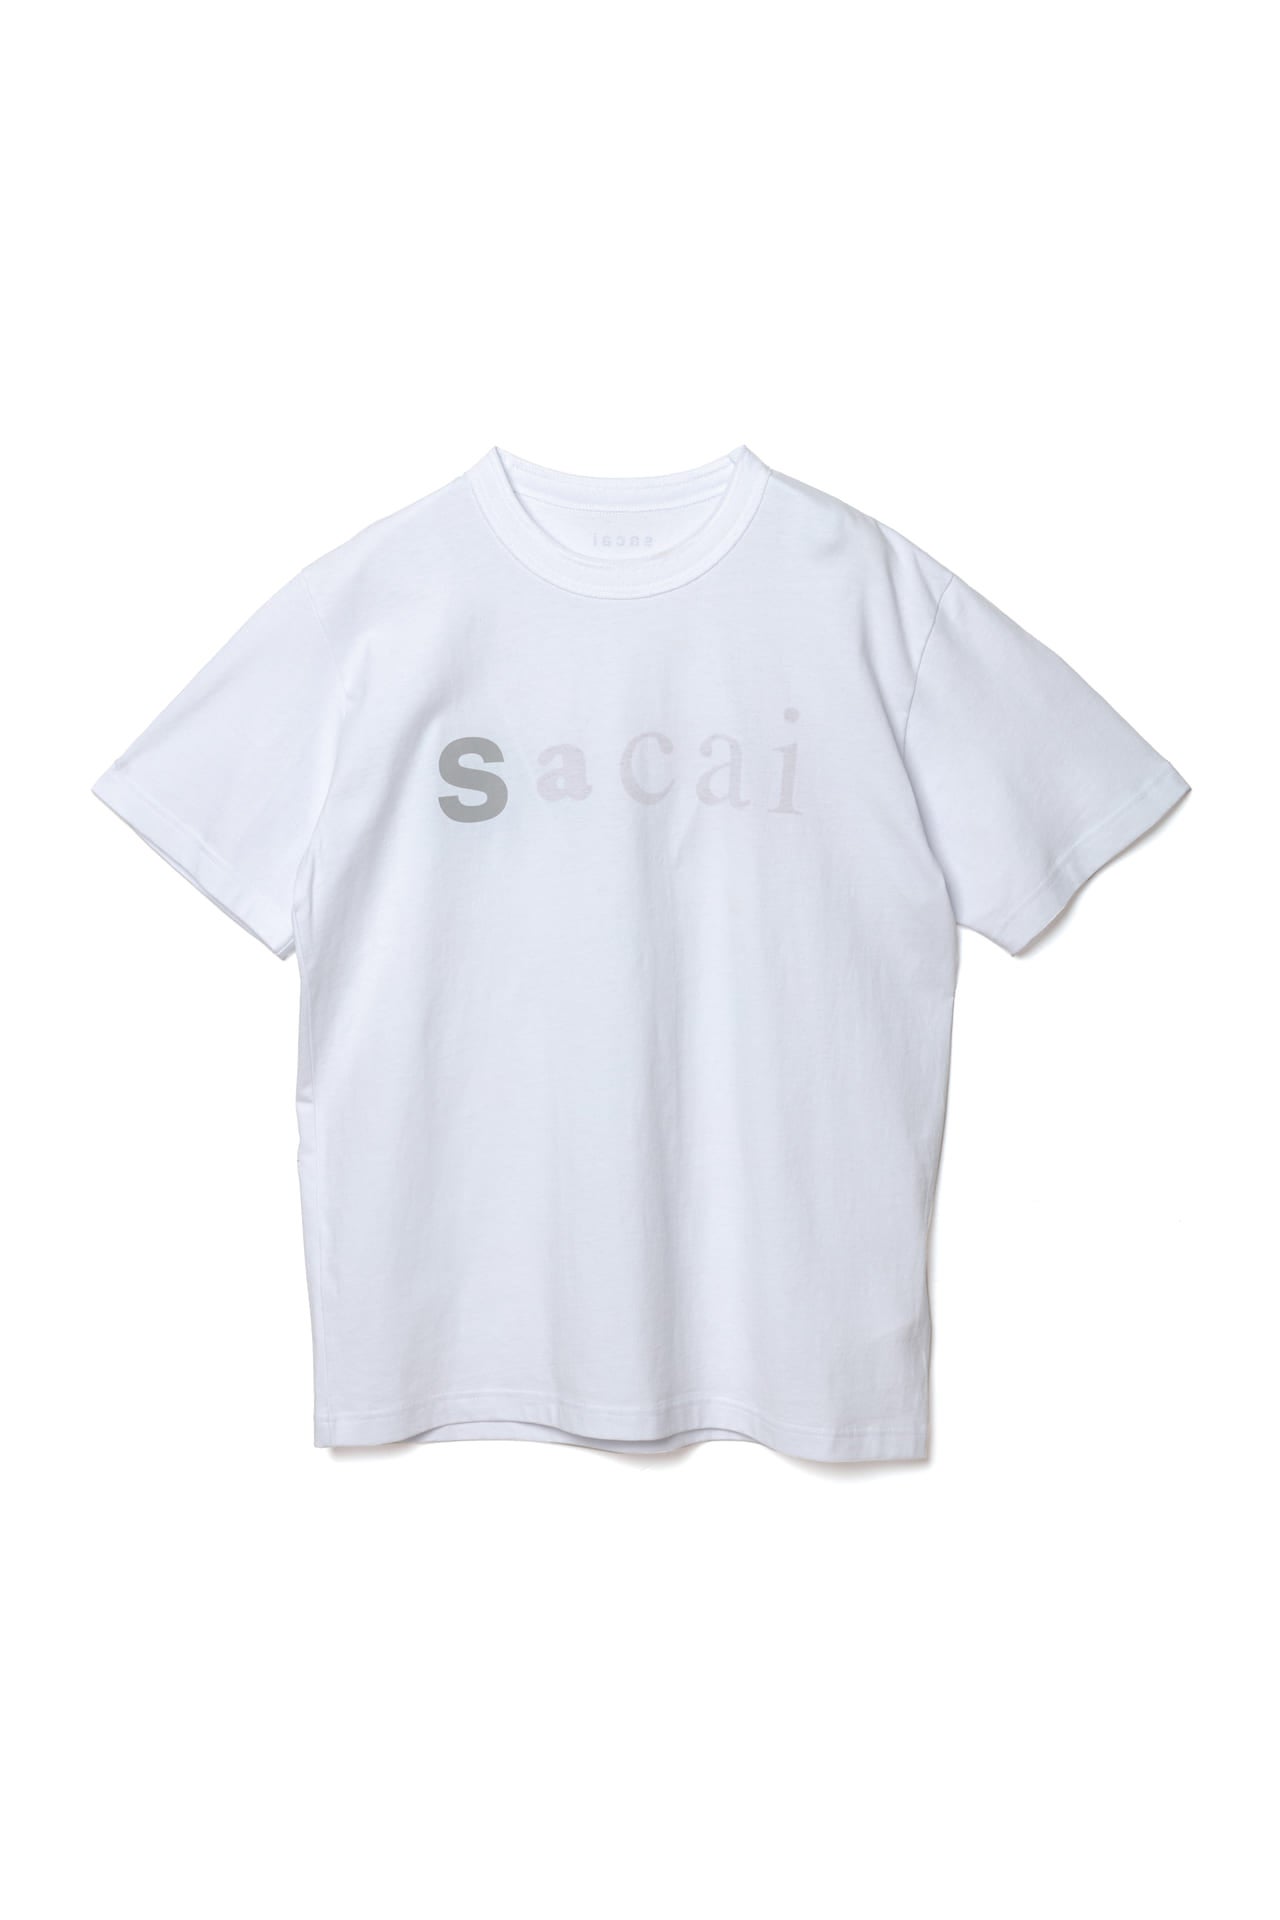 sacai（サカイ）で大人気のロゴTに新色登場。カプセルコレクションには